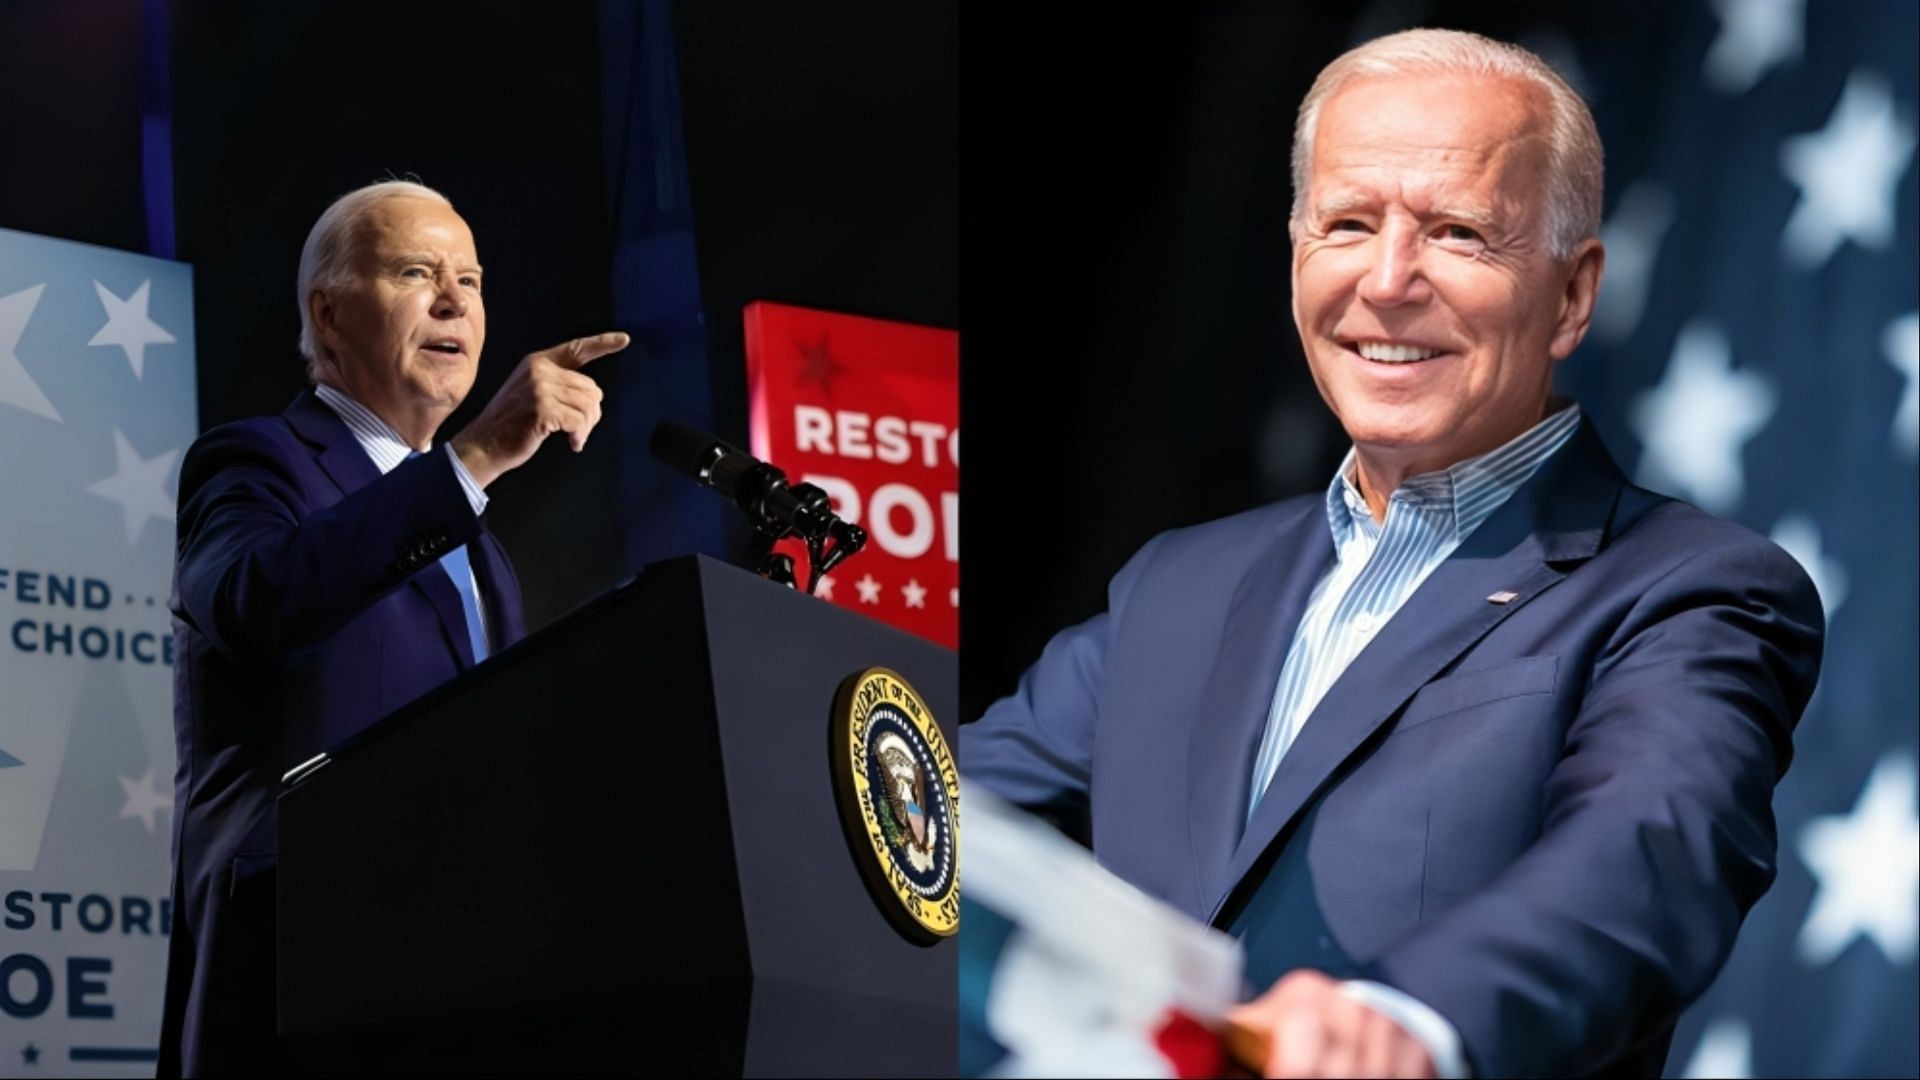  Joe Biden seemingly fails to acknowledge Hunter